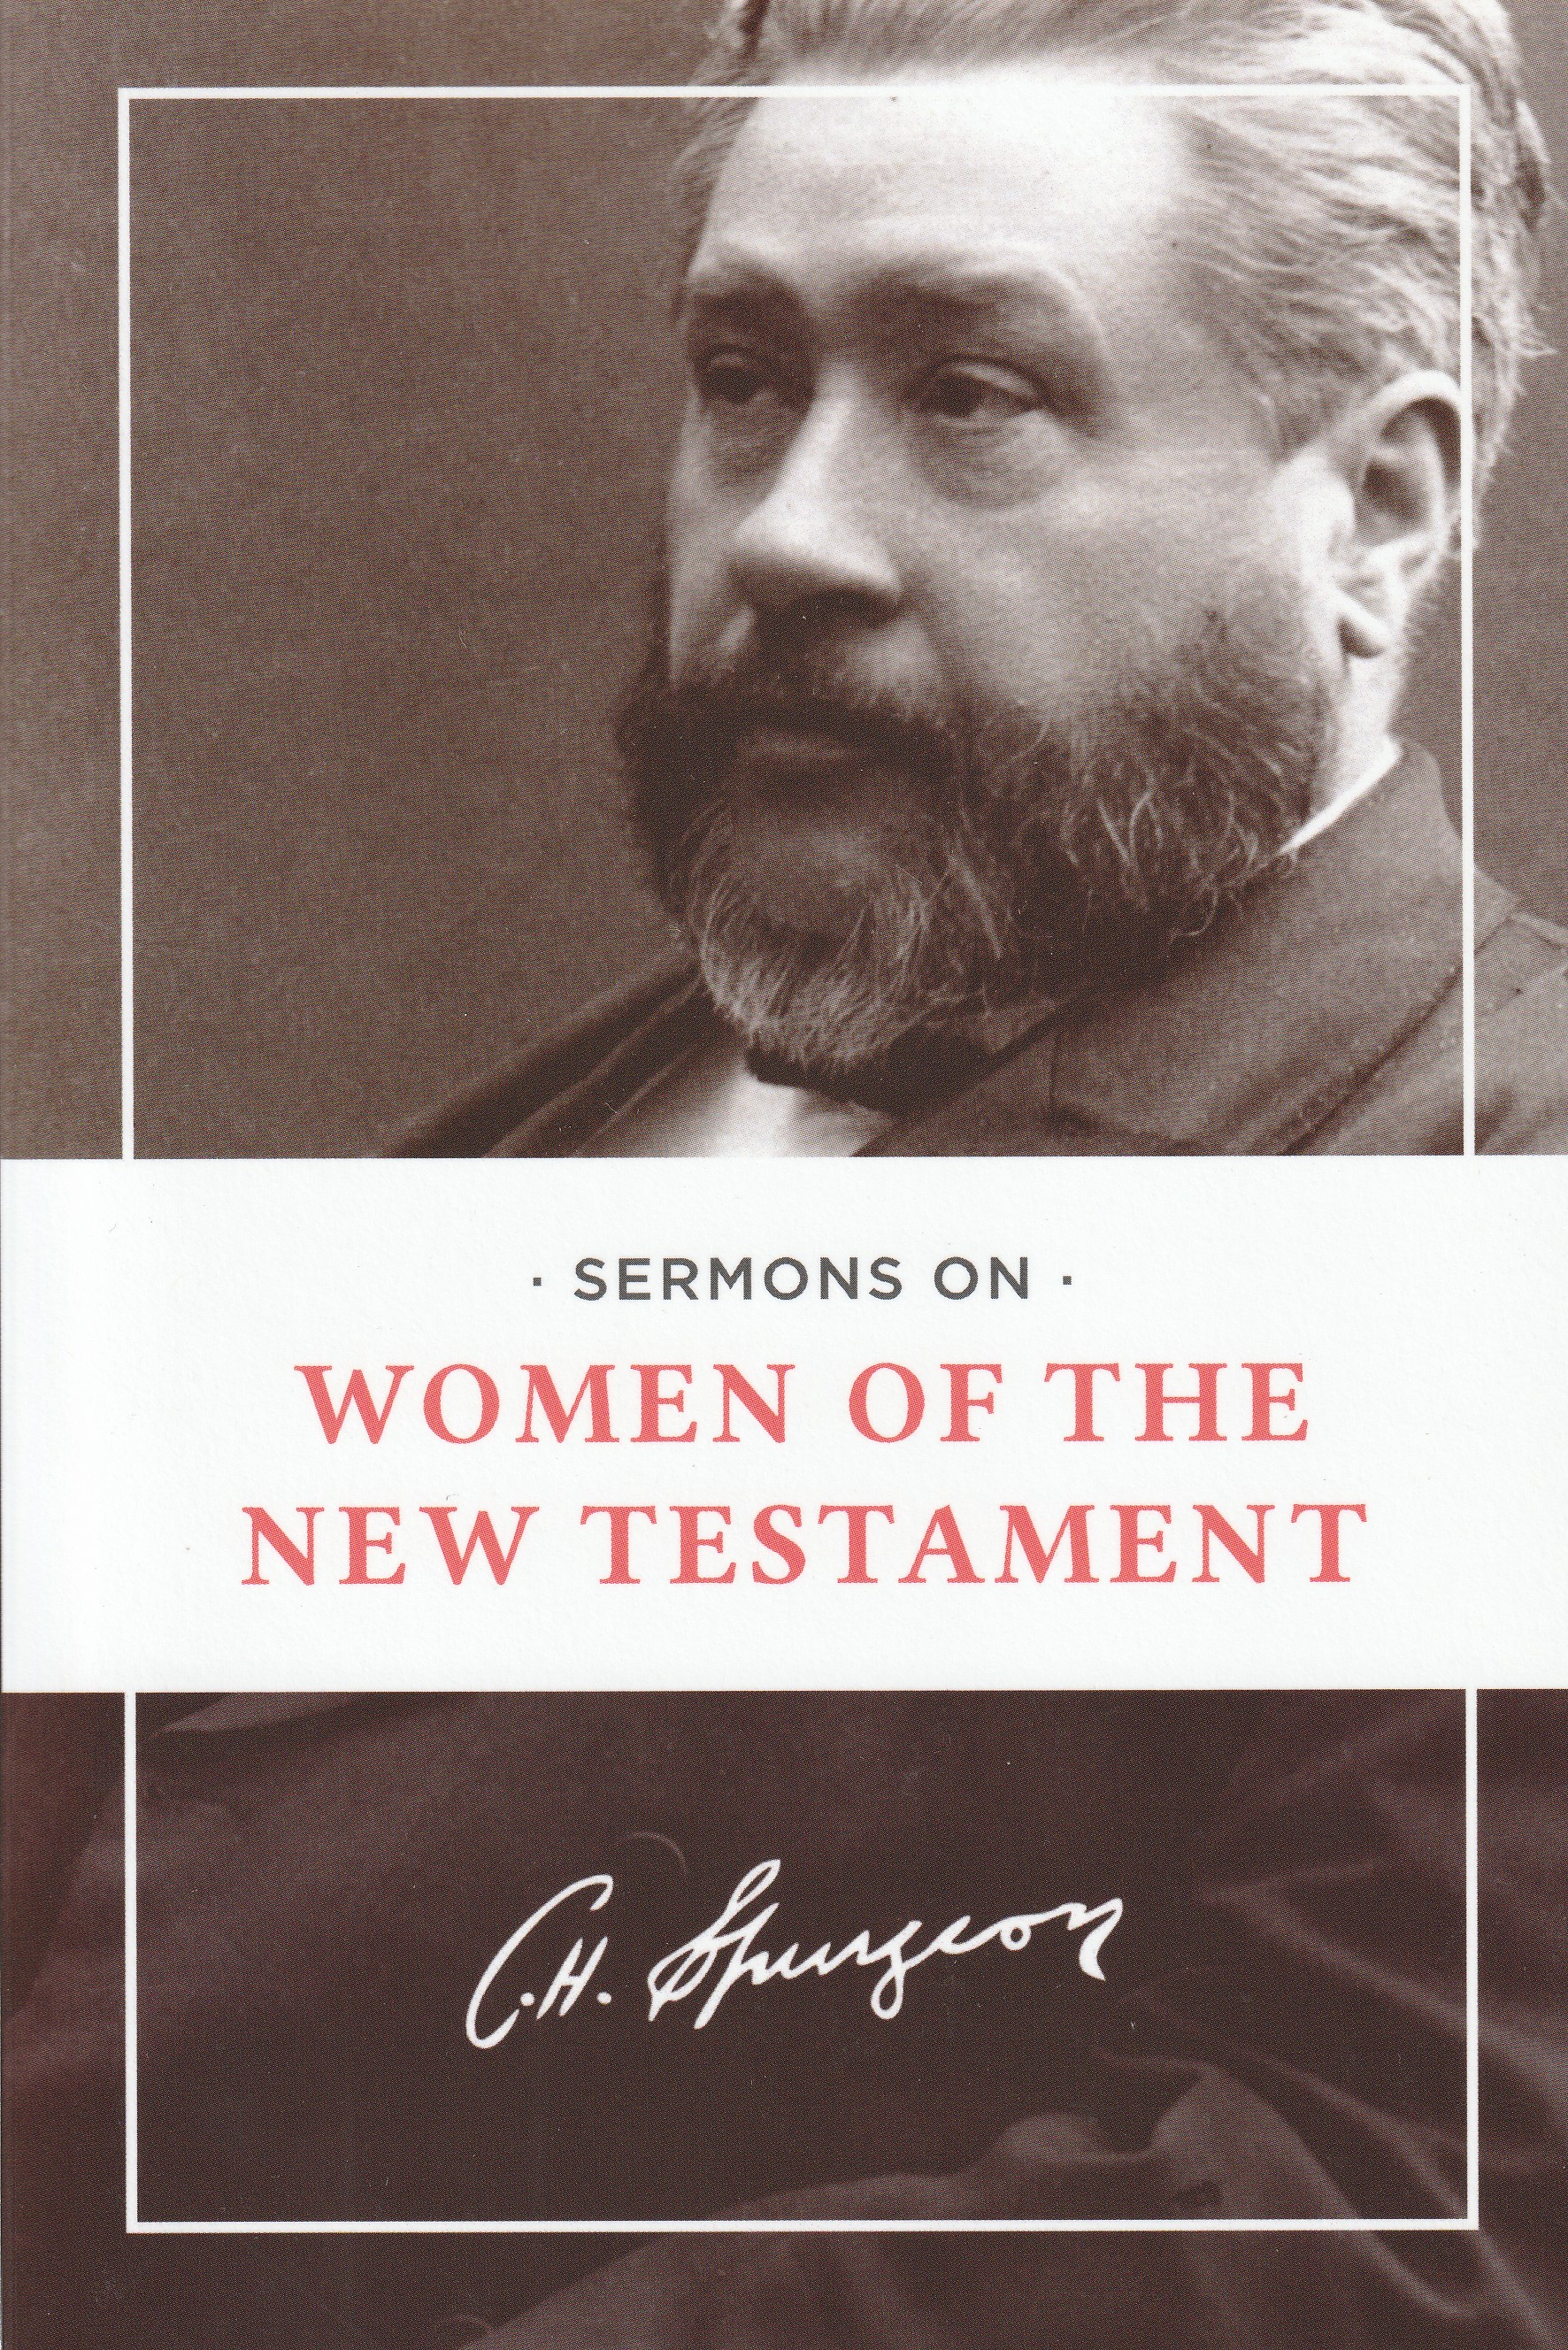 Sermons on Women of the New Testament